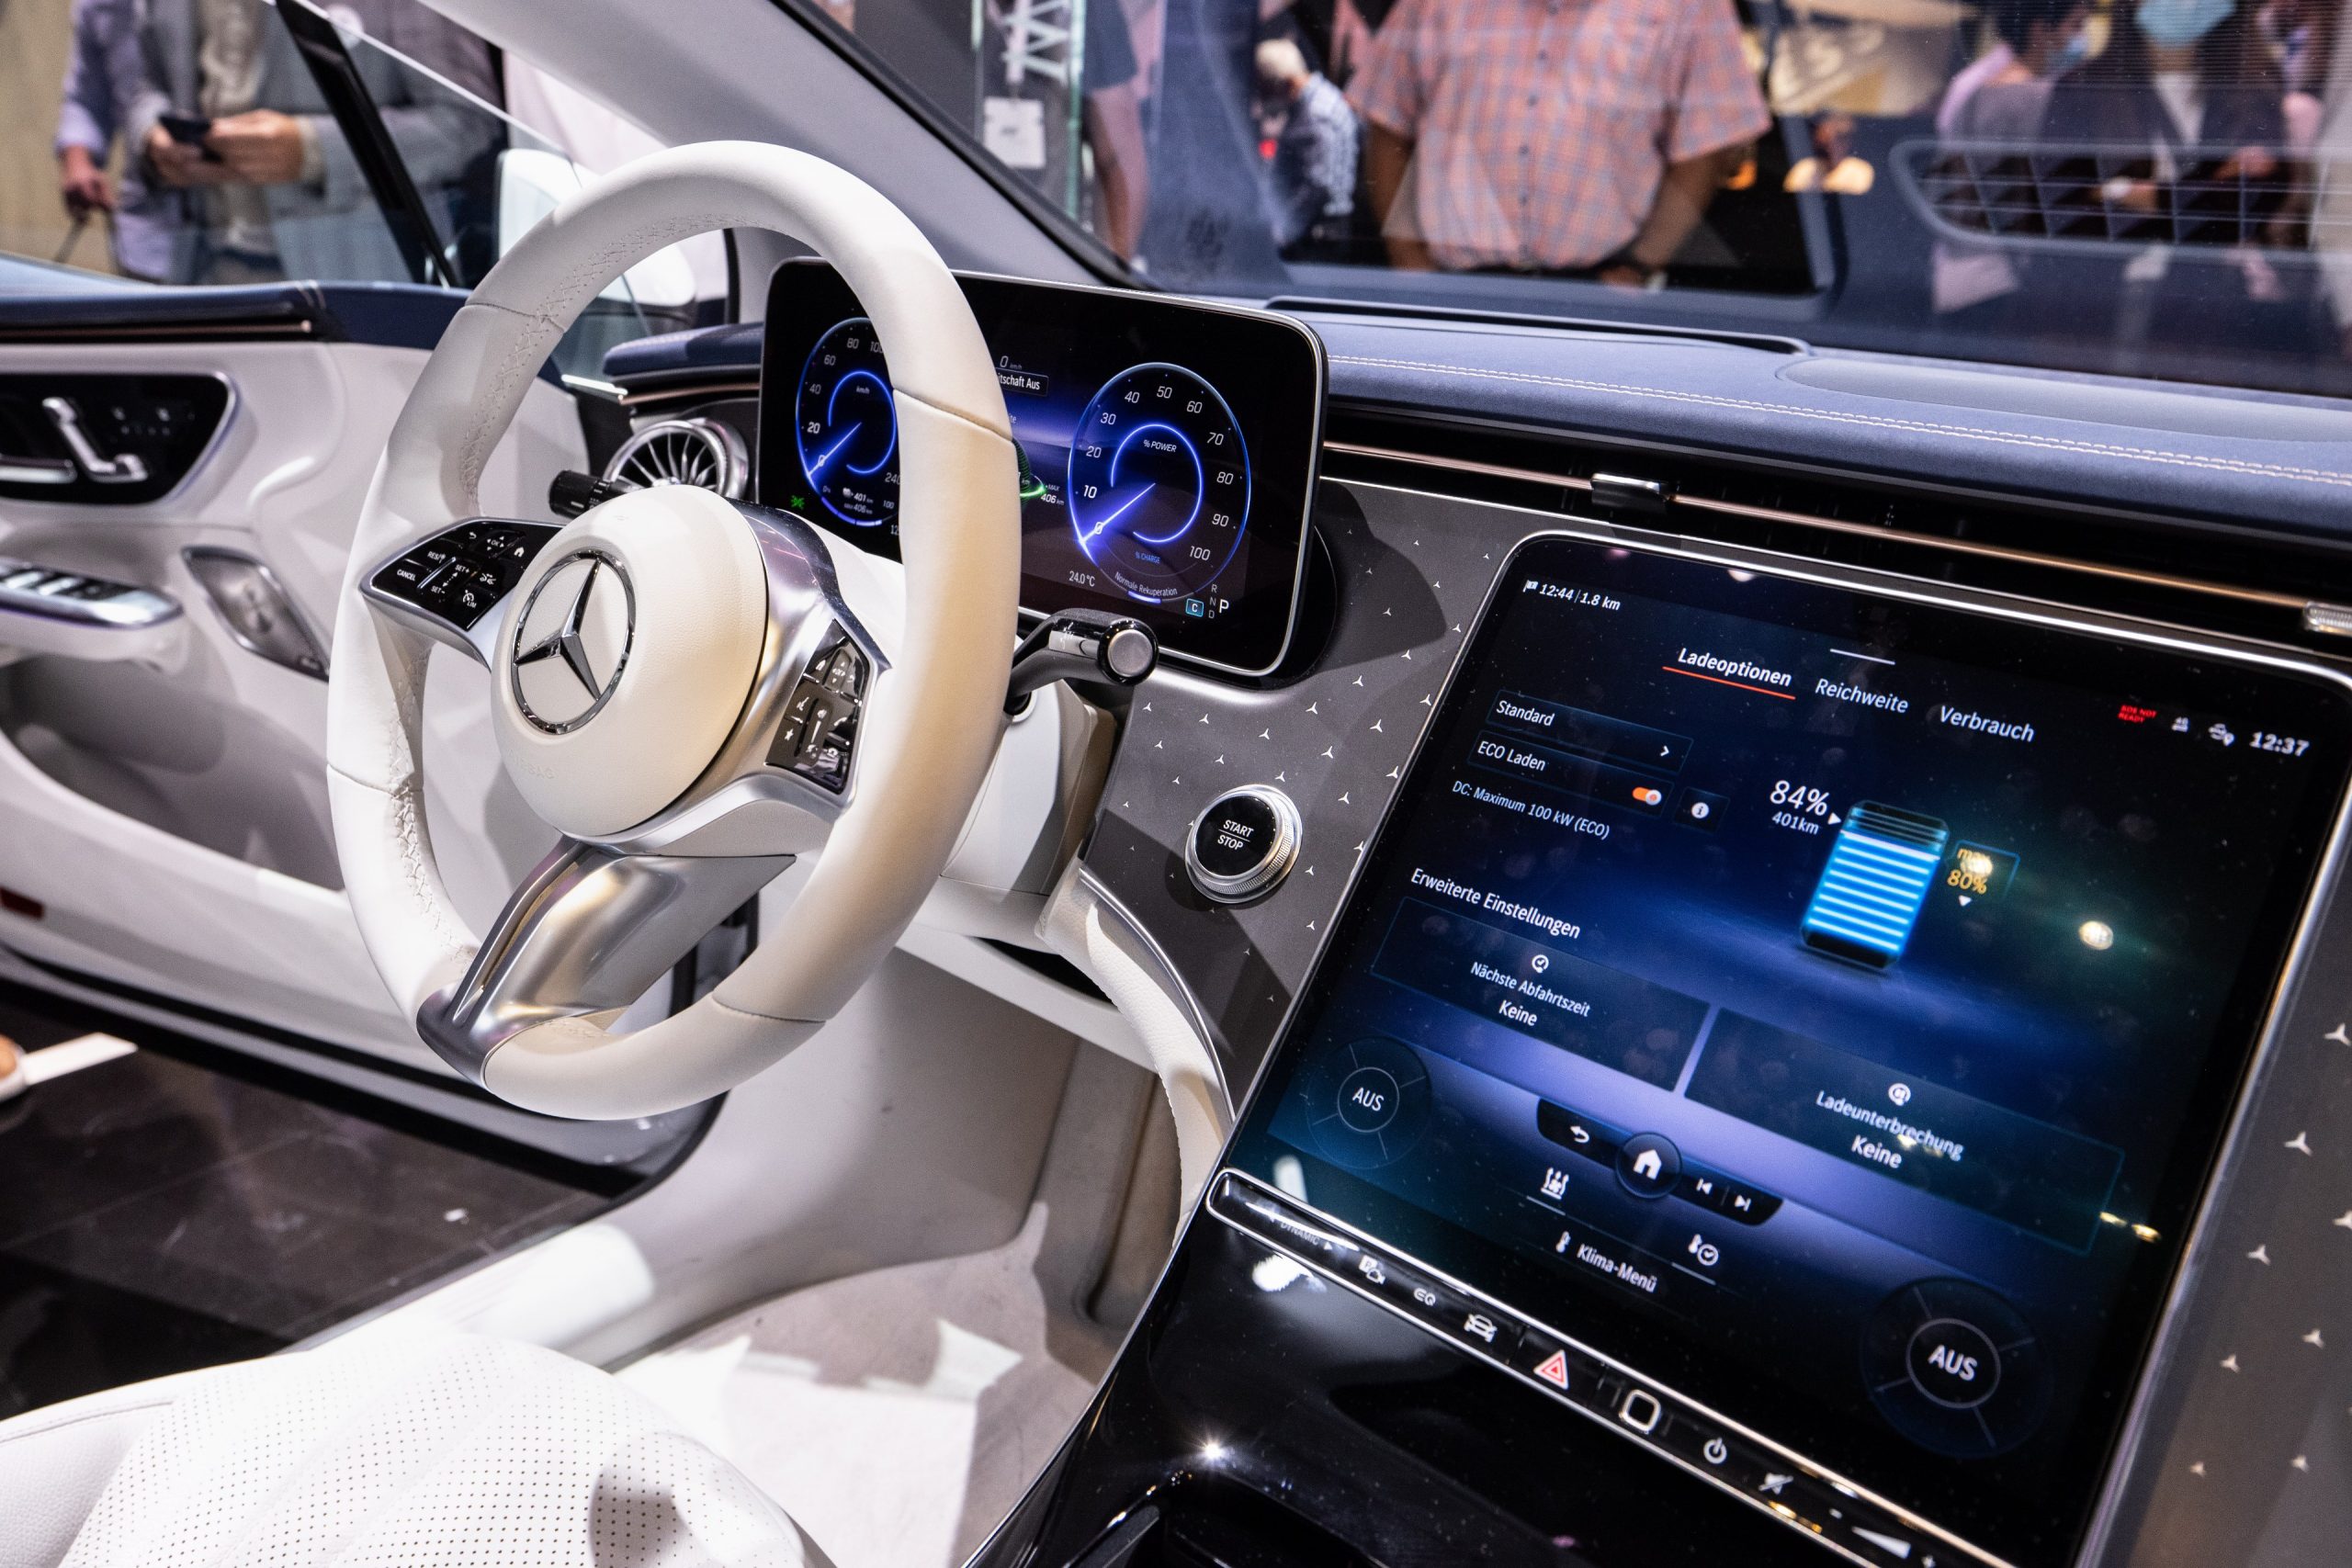 A view of a Mercedes-Benz infotainment system